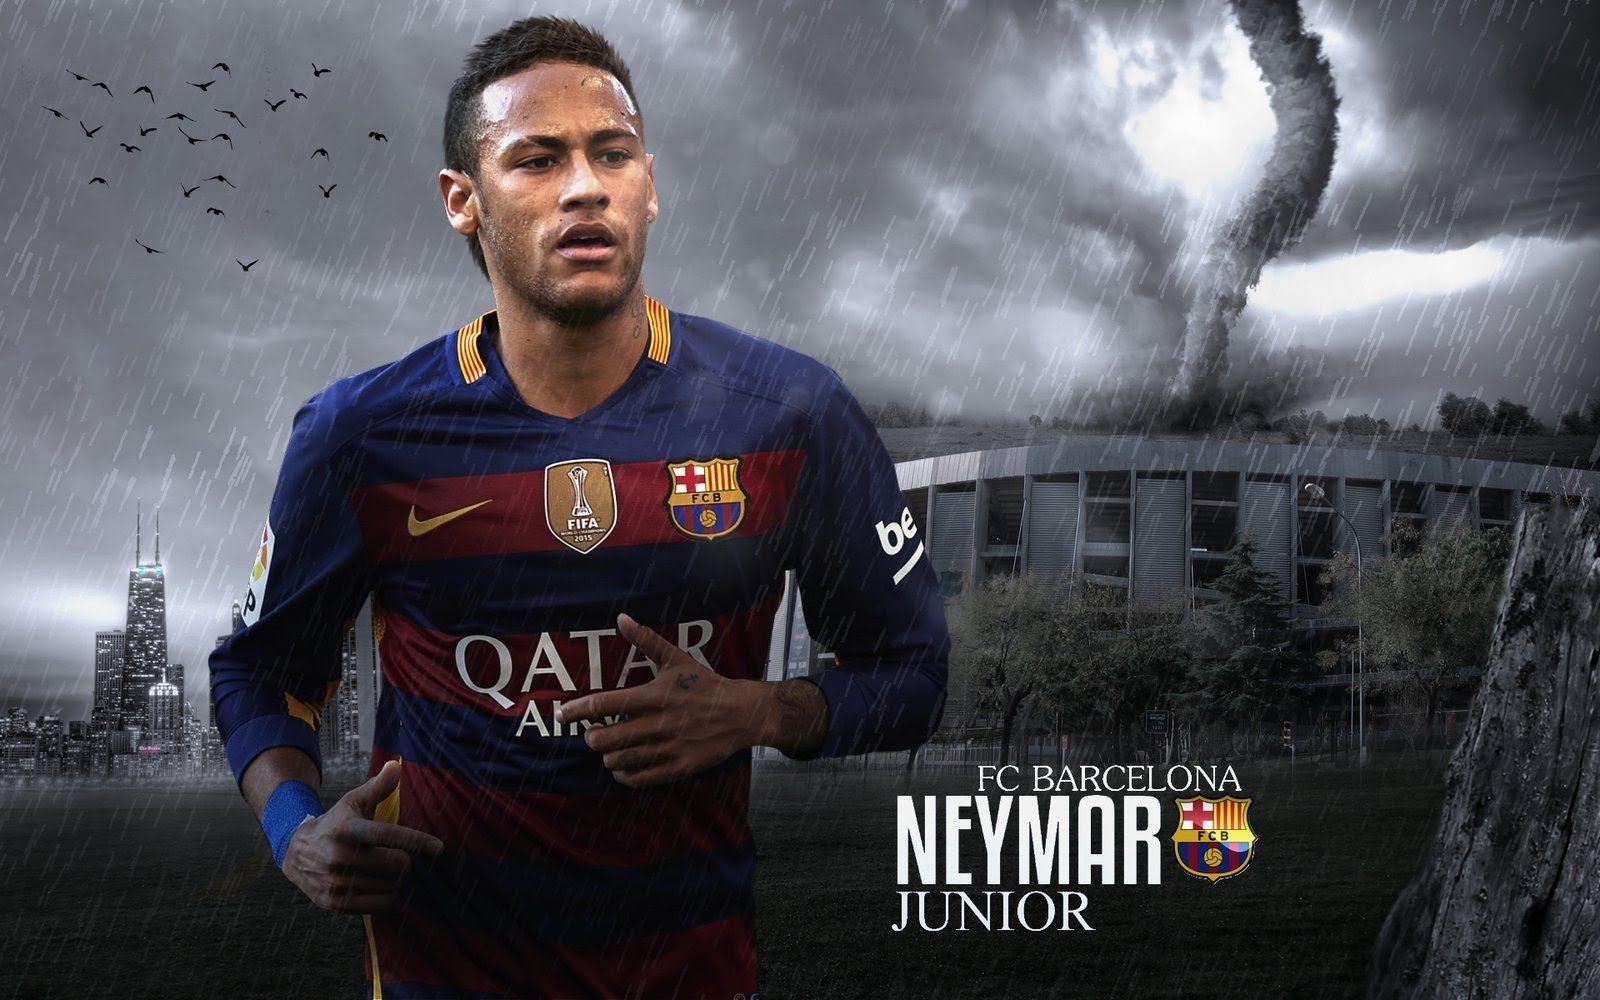 Neymar JR ○ [ Die Young ] Skills & Goals 2016 [HD]